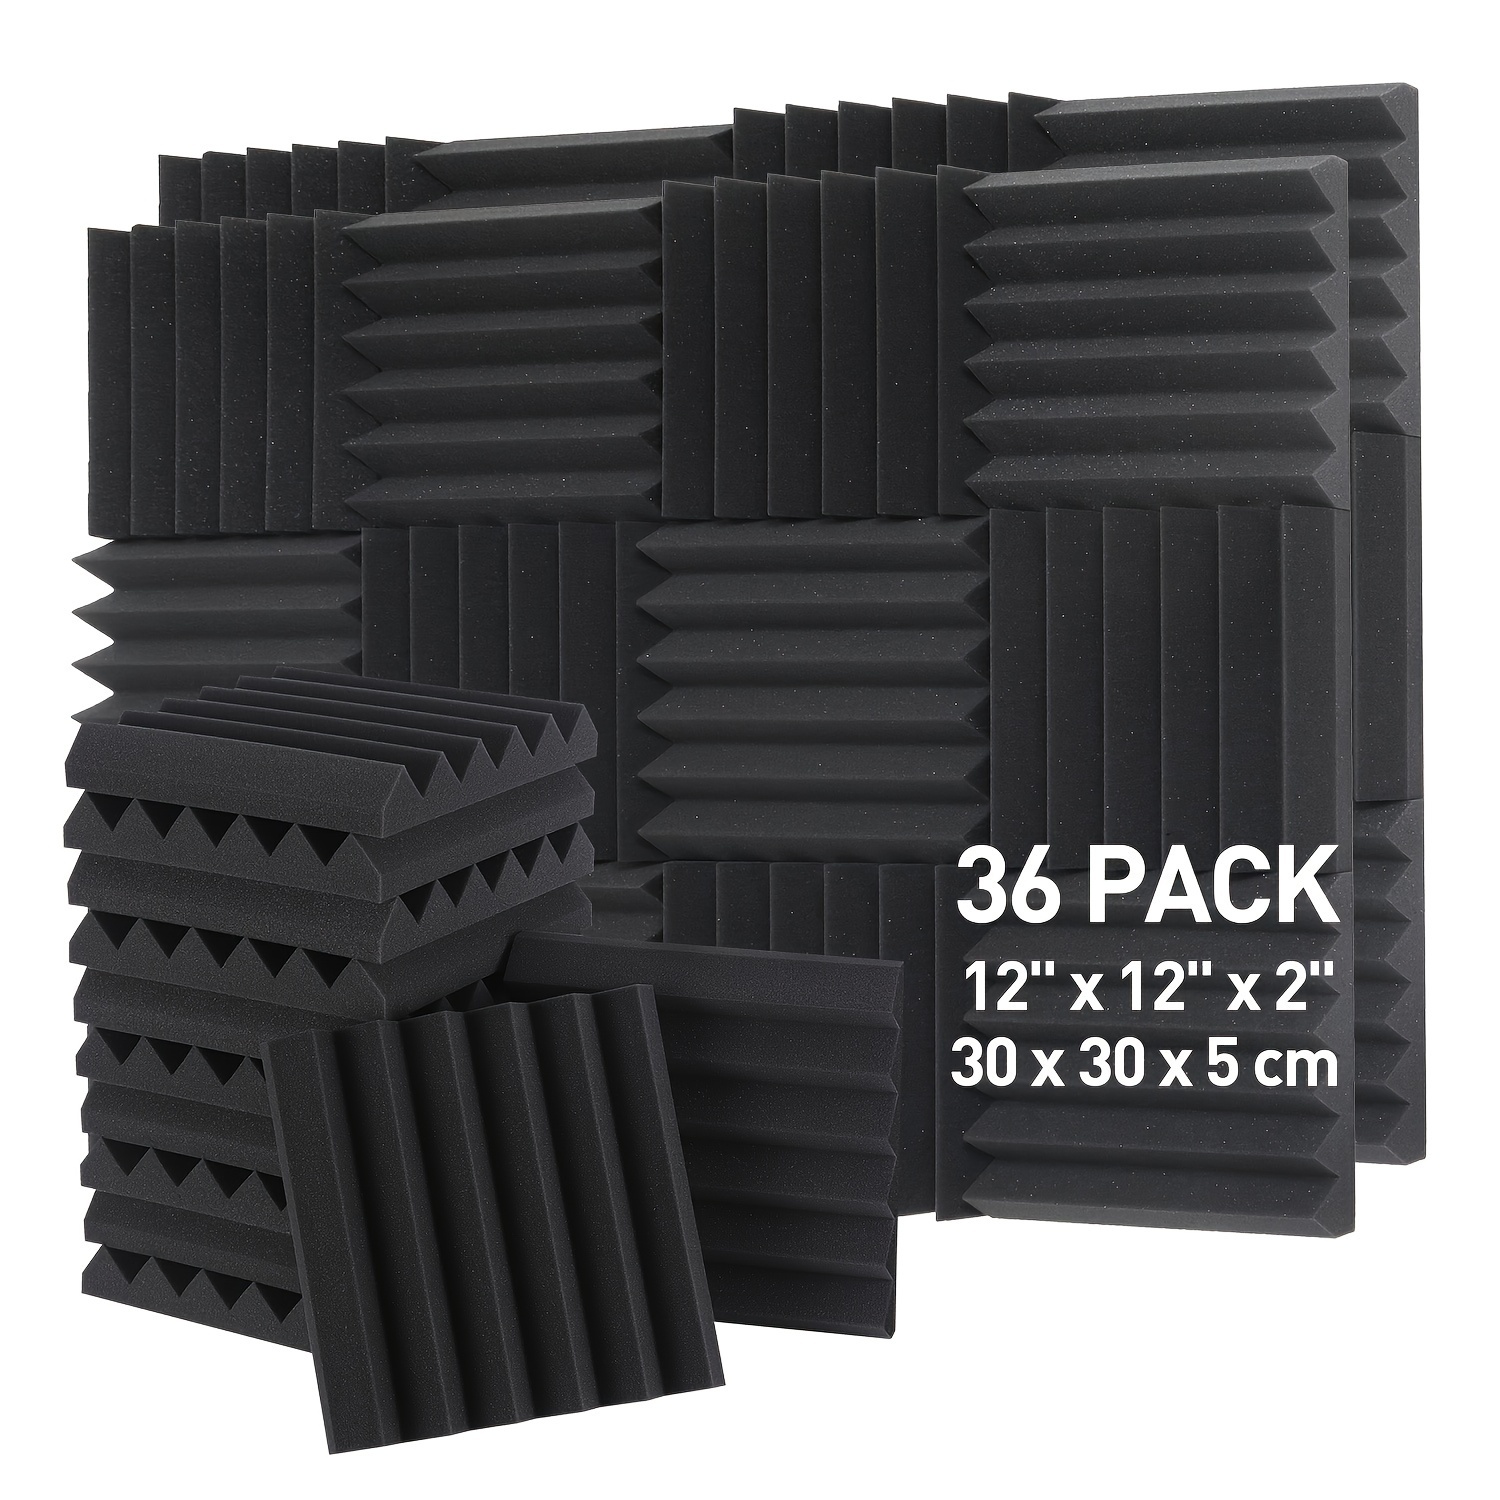 

36pcs Black Sound Proof Panels For Walls, High Density Wedge Acoustic Panels, Fire-retardant Sound Panels For Recording Studio, Office, Music Studio